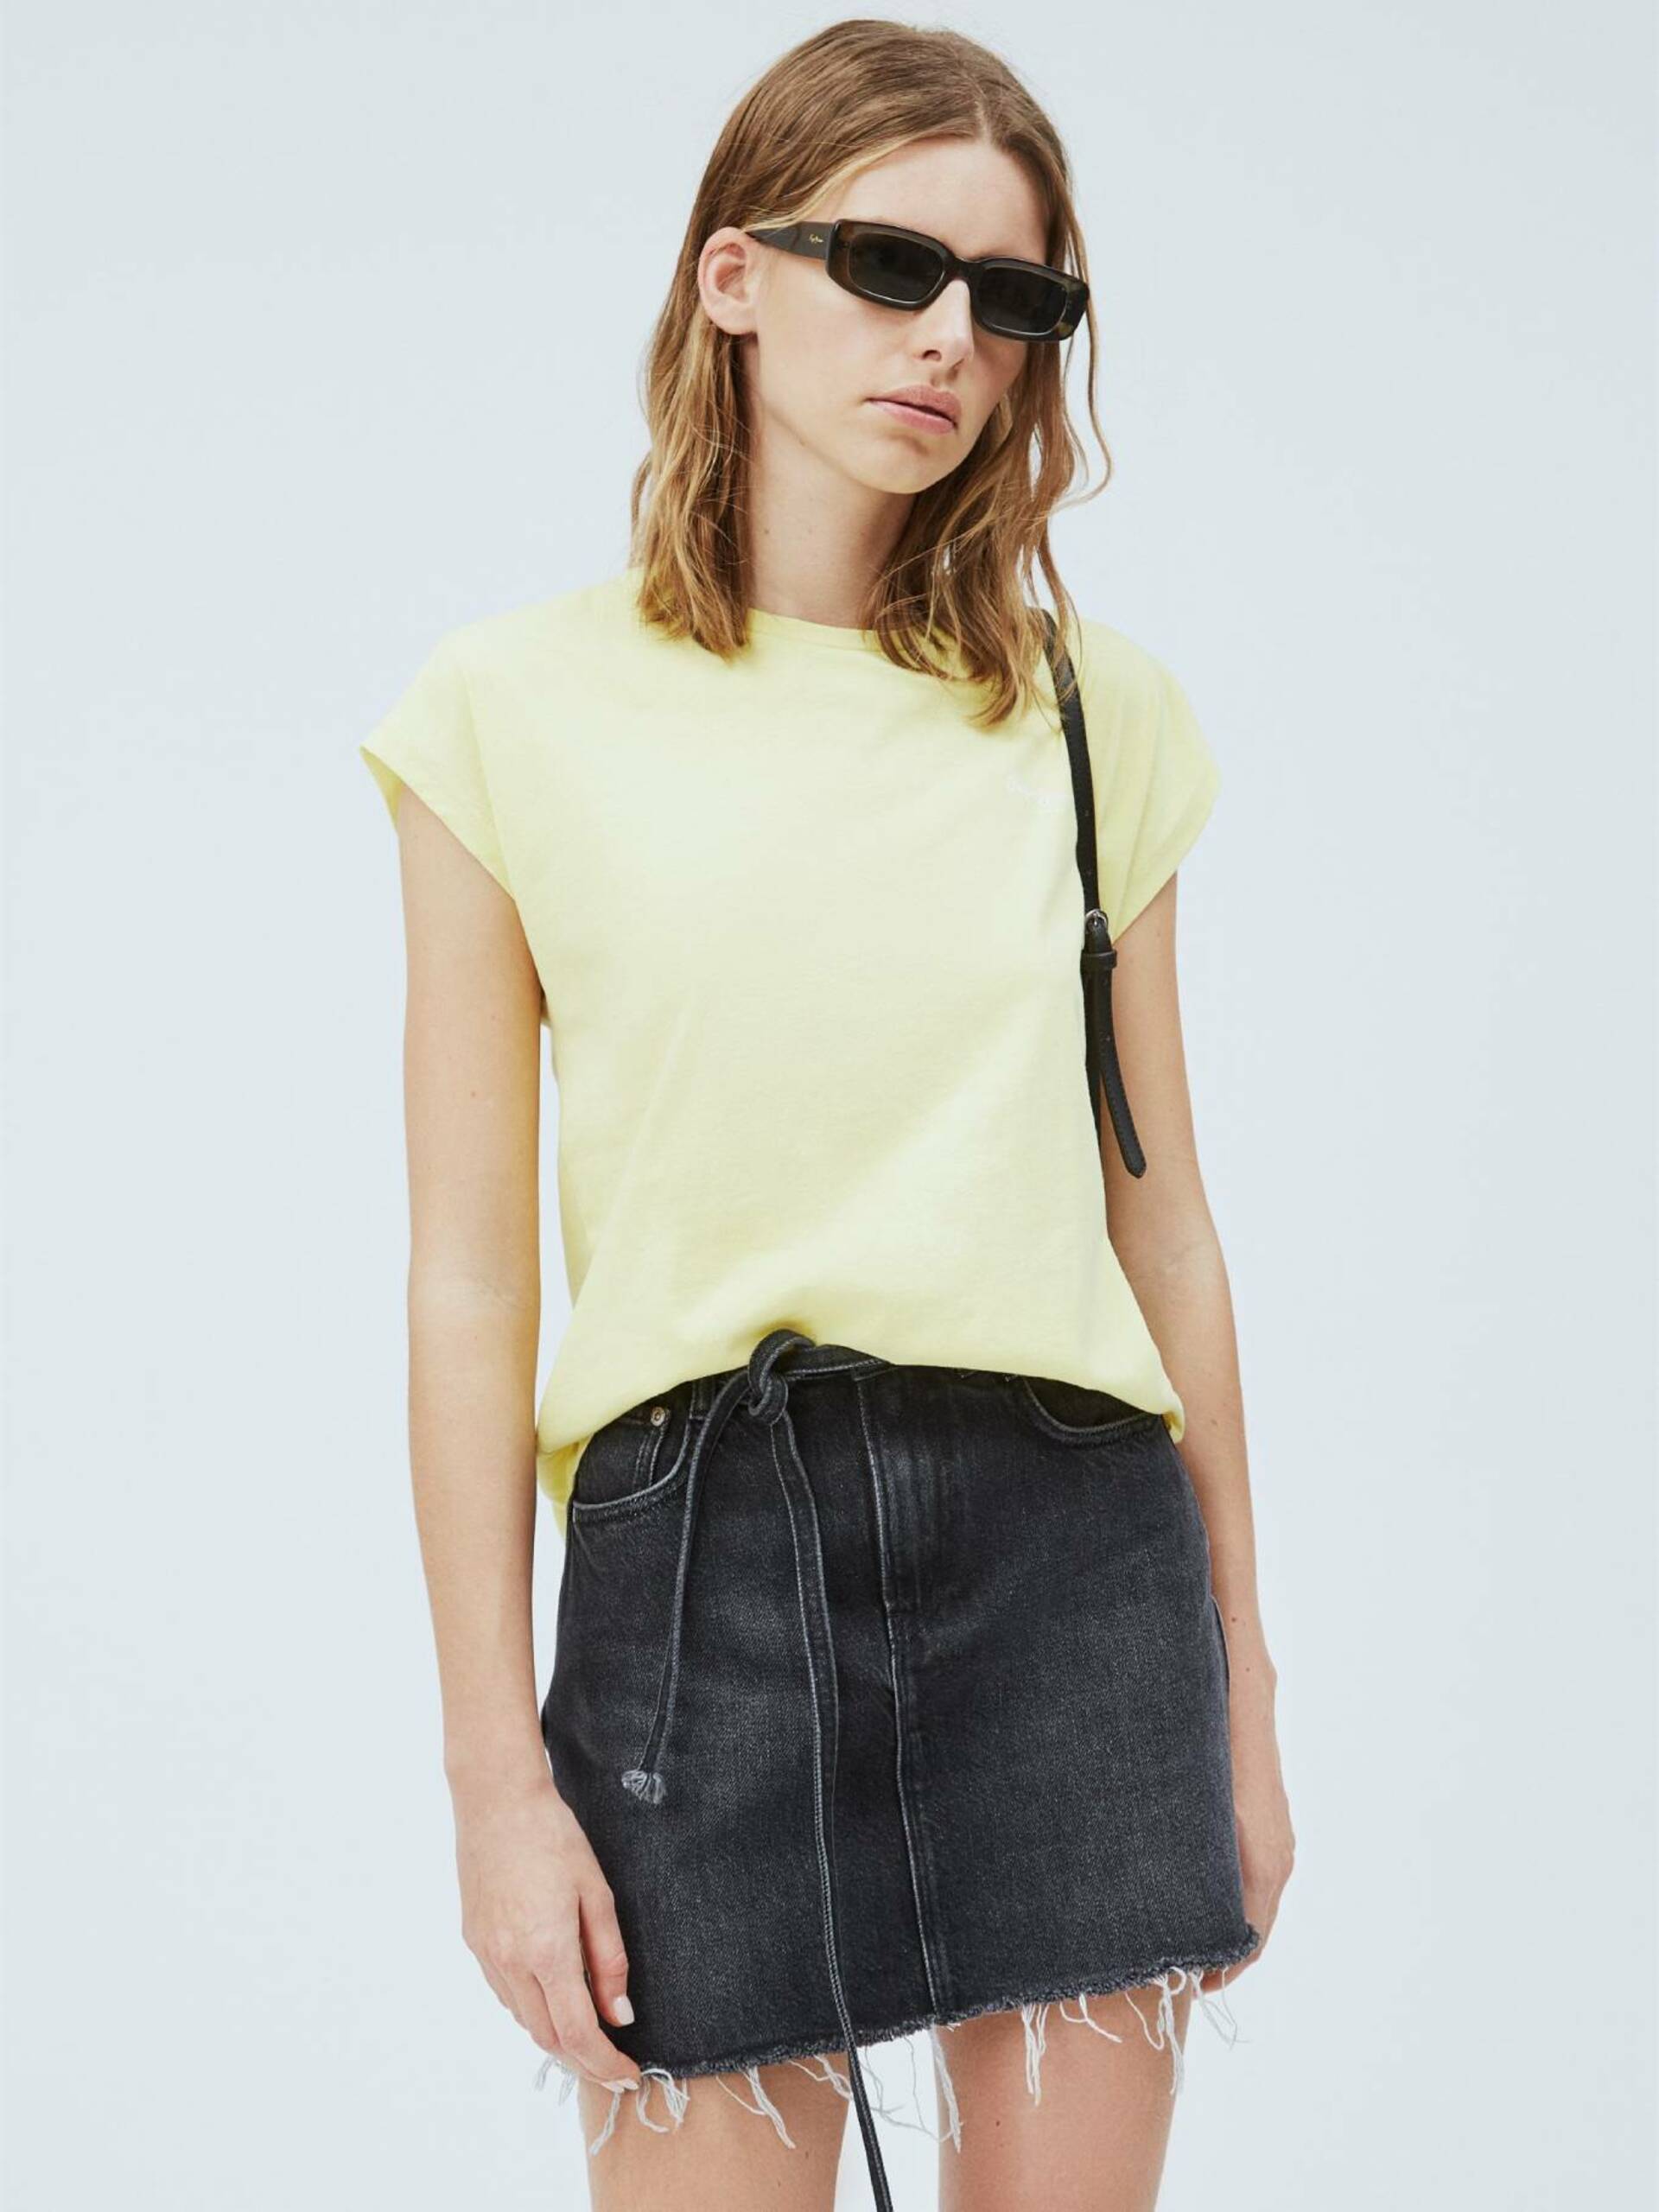 Pepe Jeans dámské žluté tričko - XS (014)